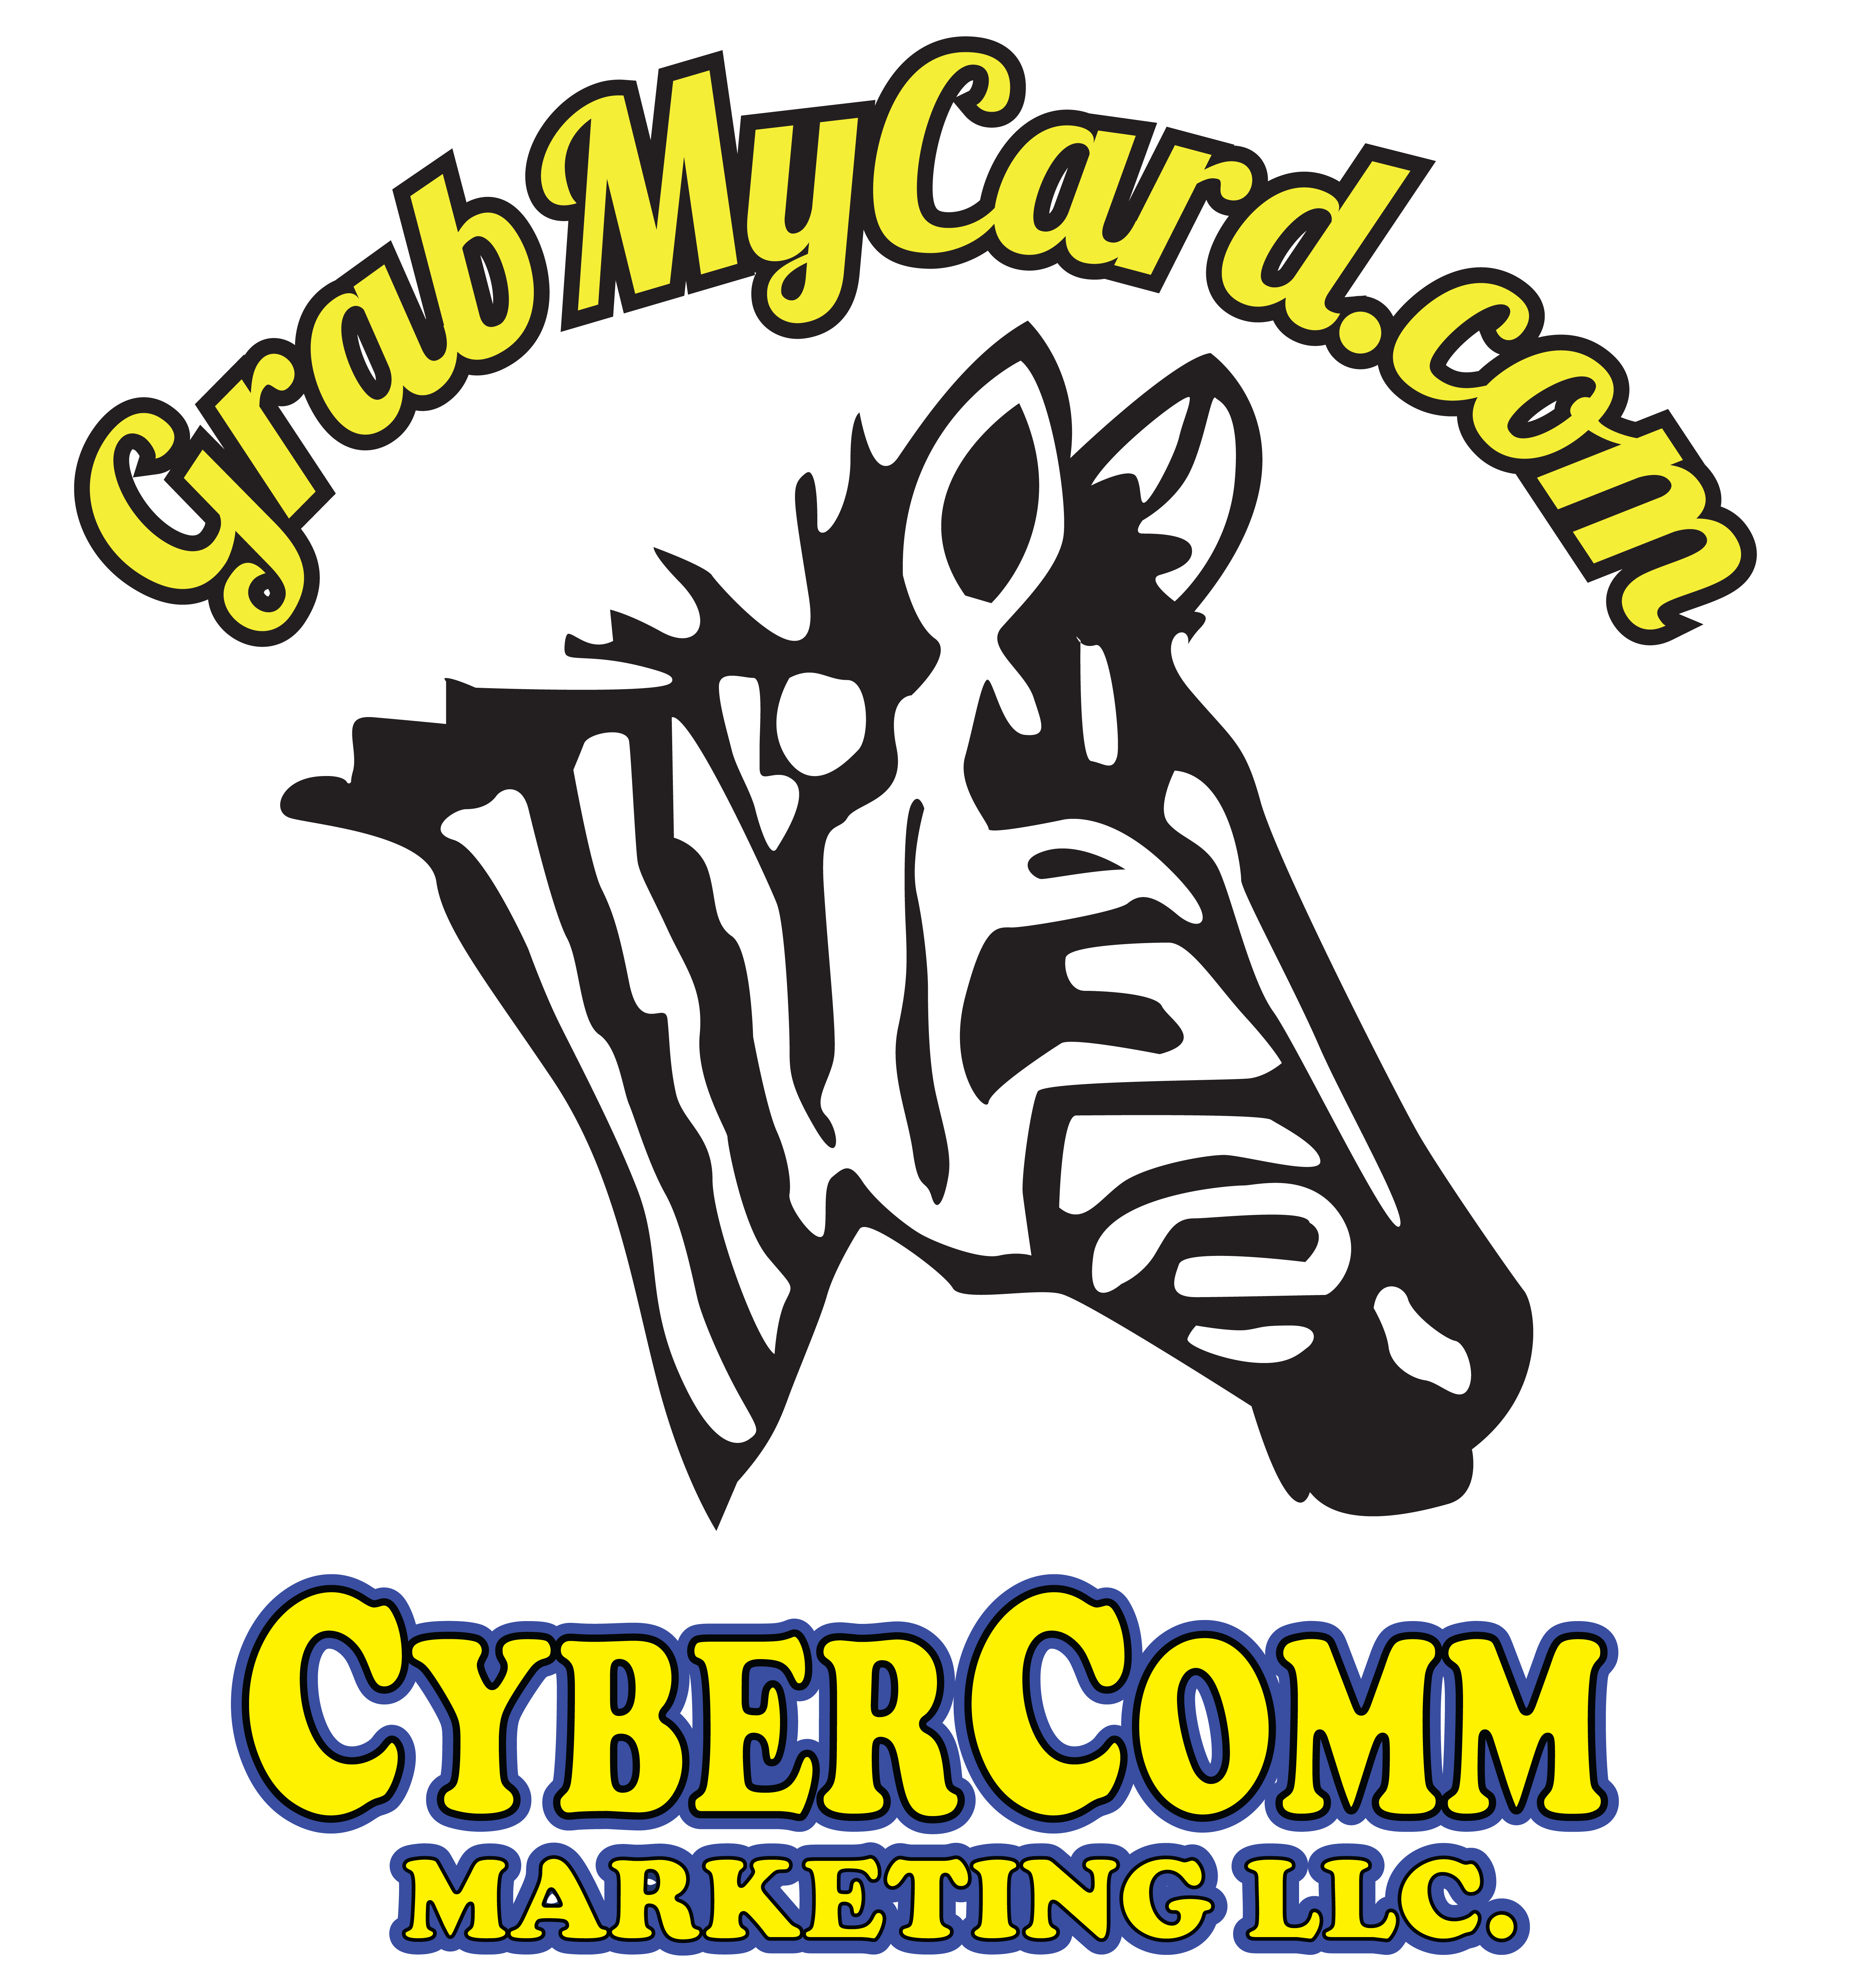 The digital business card from CyberComm Marketing, LLC